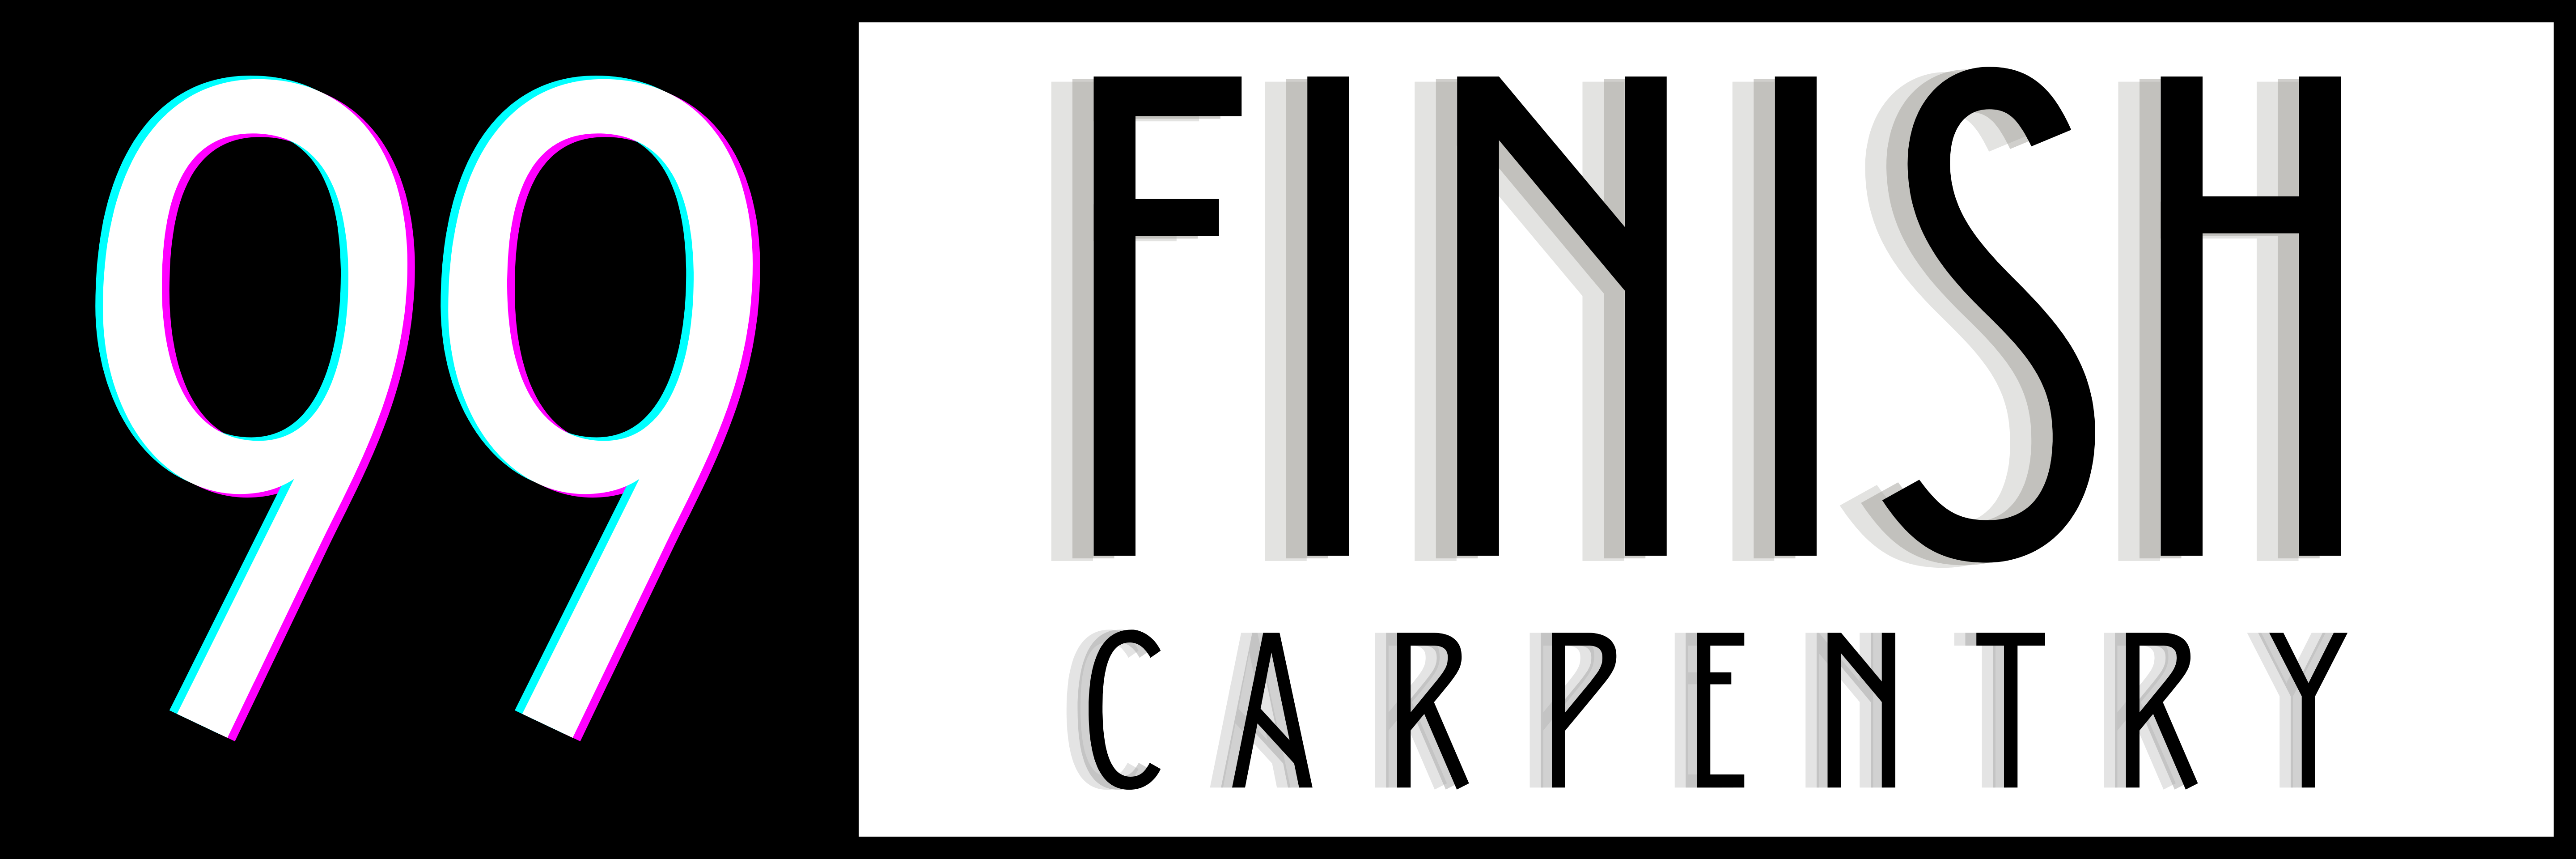 99 finish carpentry logo